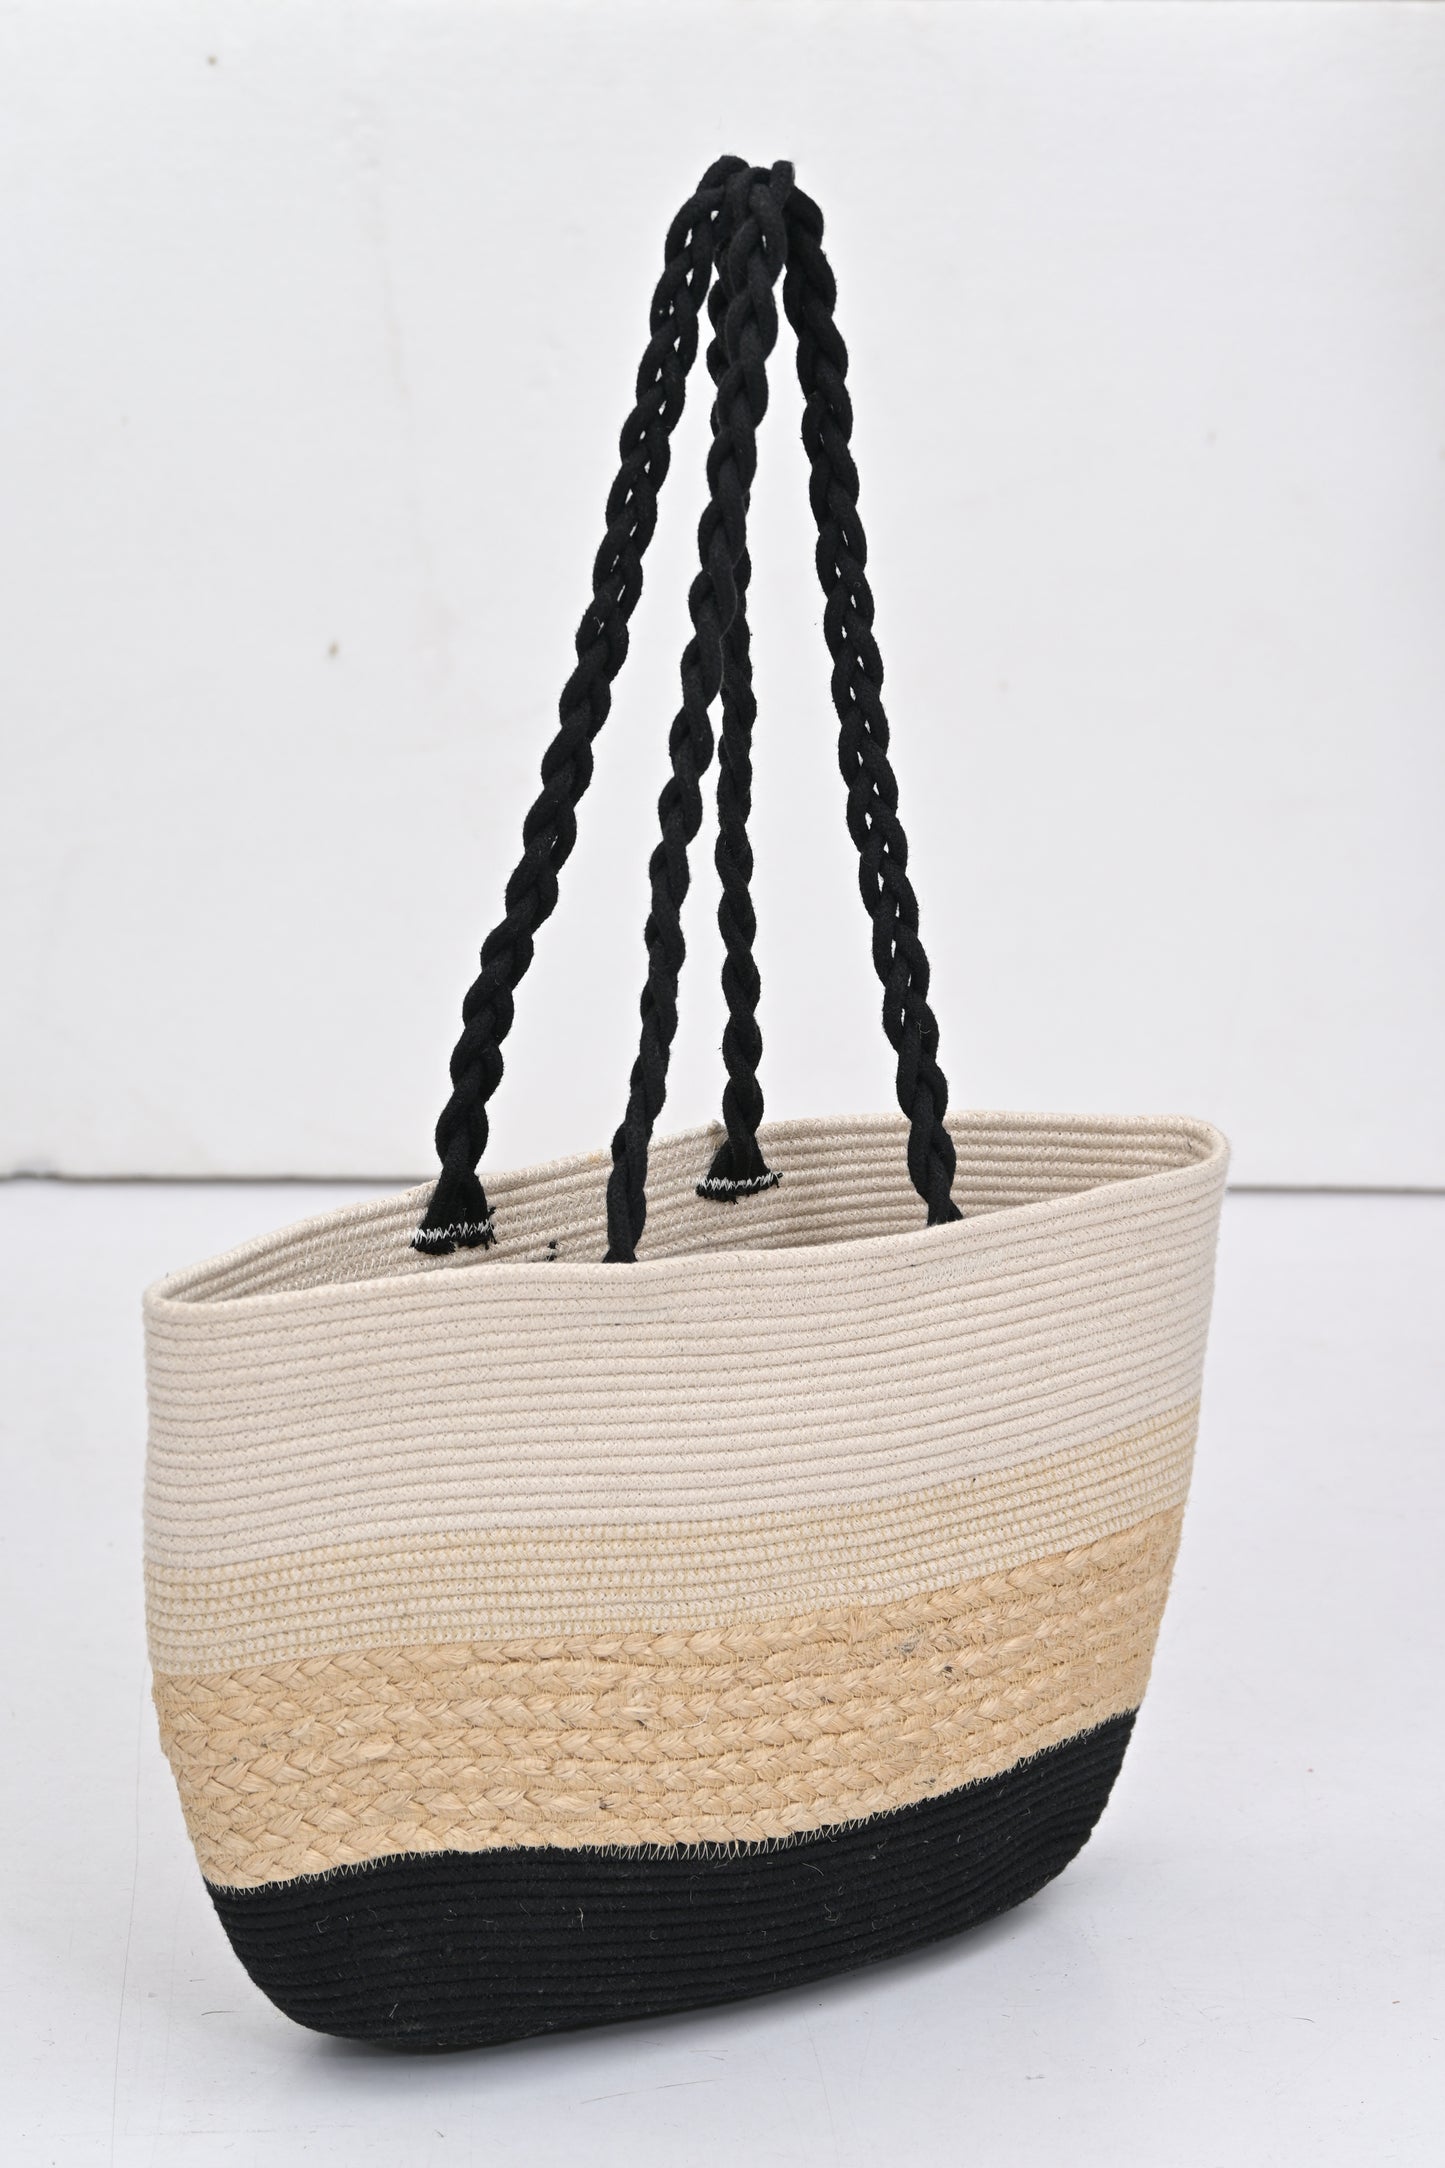 Handmade Three-Striped Cotton Jute Hand Bag with Braided Handle